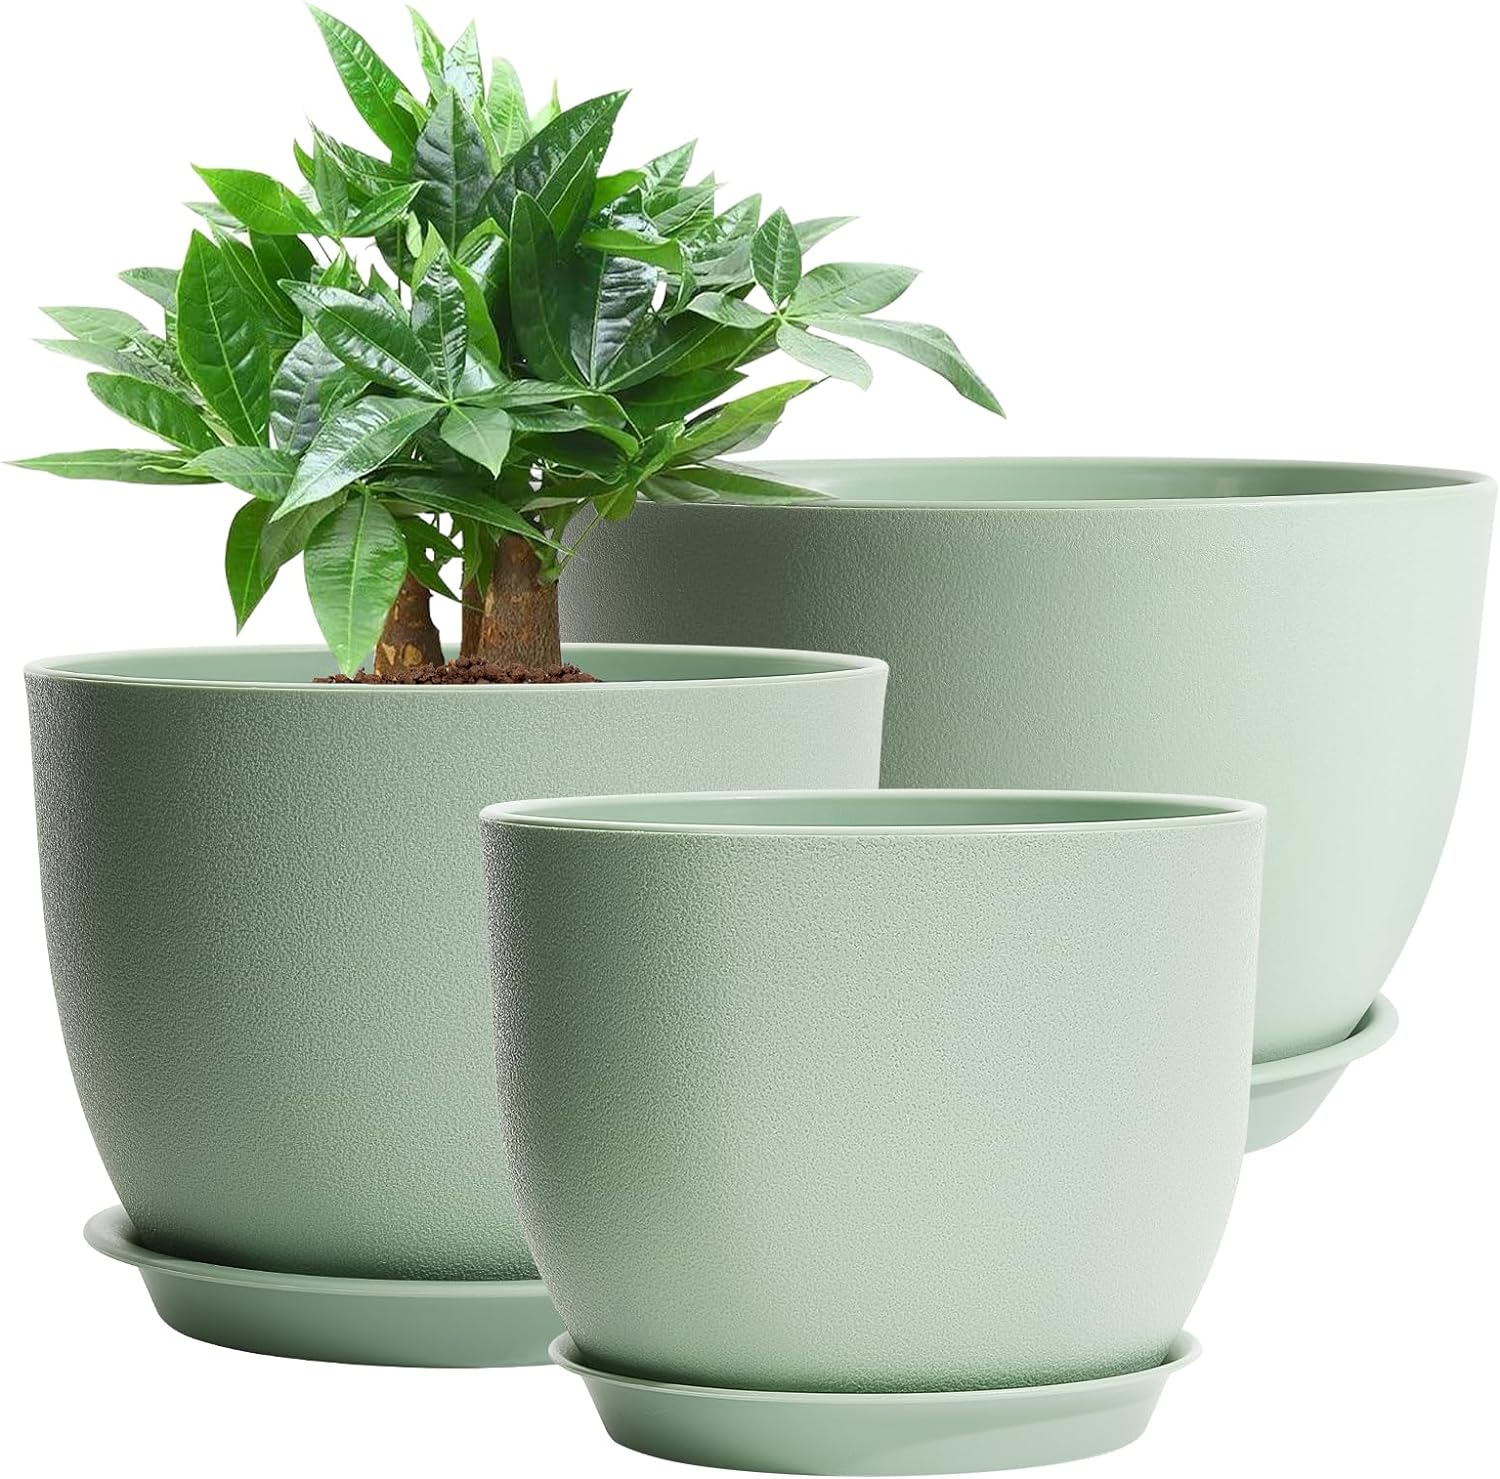 GARDIFE 12/10/9 inch Plant pots, Large planters for Indoor Plants, Flower pots, Green